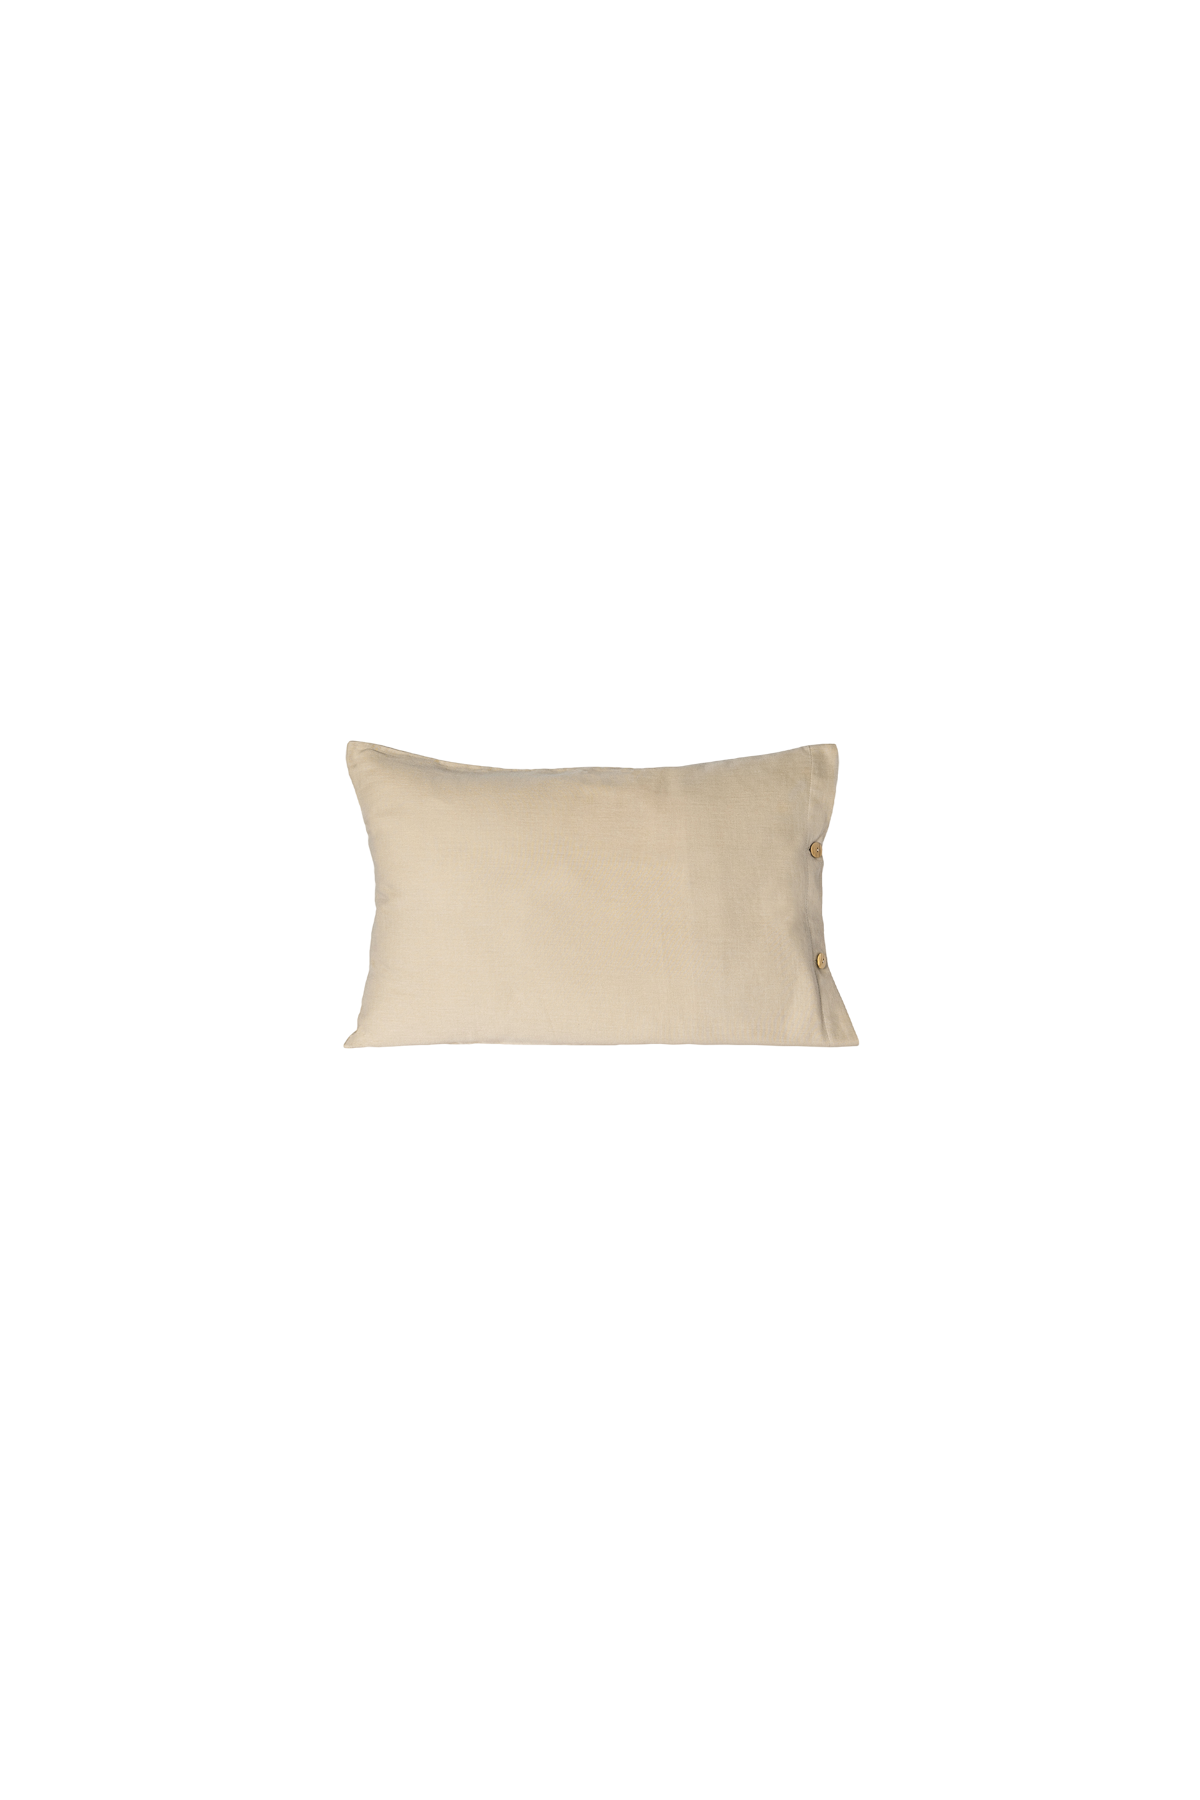 Cléophée the pillowcase